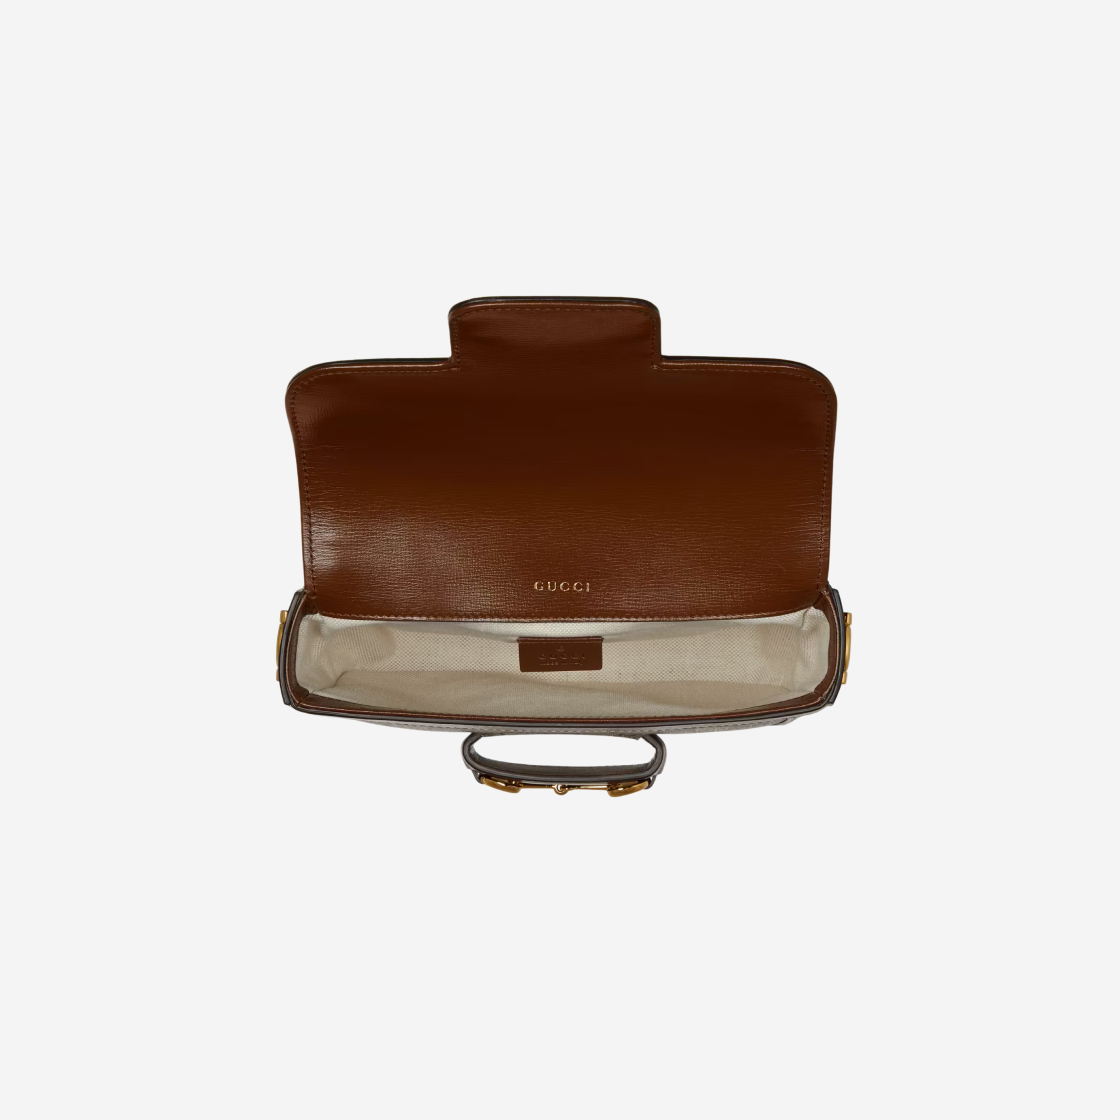 Gucci Horsebit 1955 mini bag in beige and ebony GG Supreme